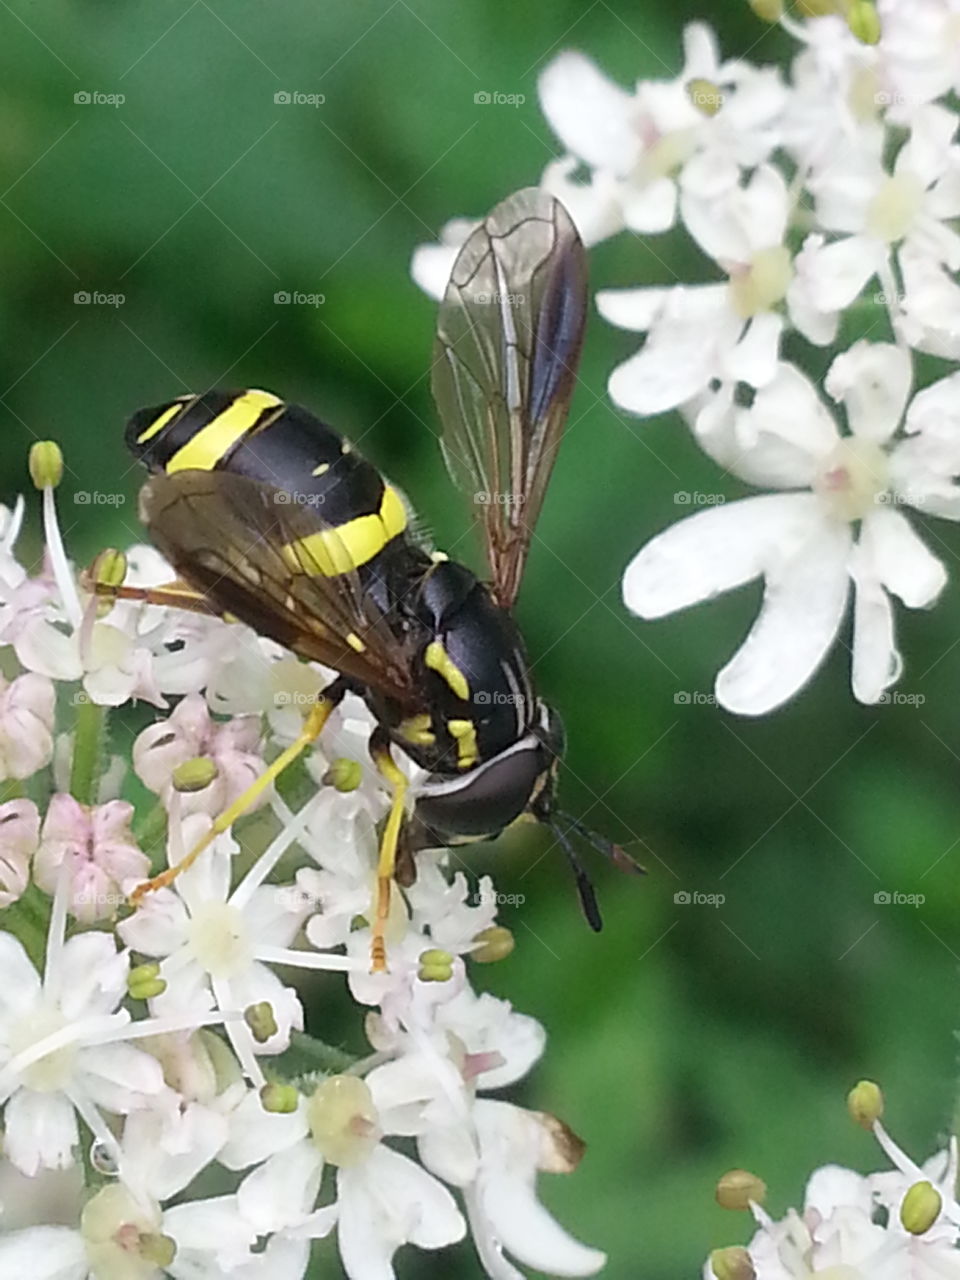 Bug. Barry, South Wales, UK